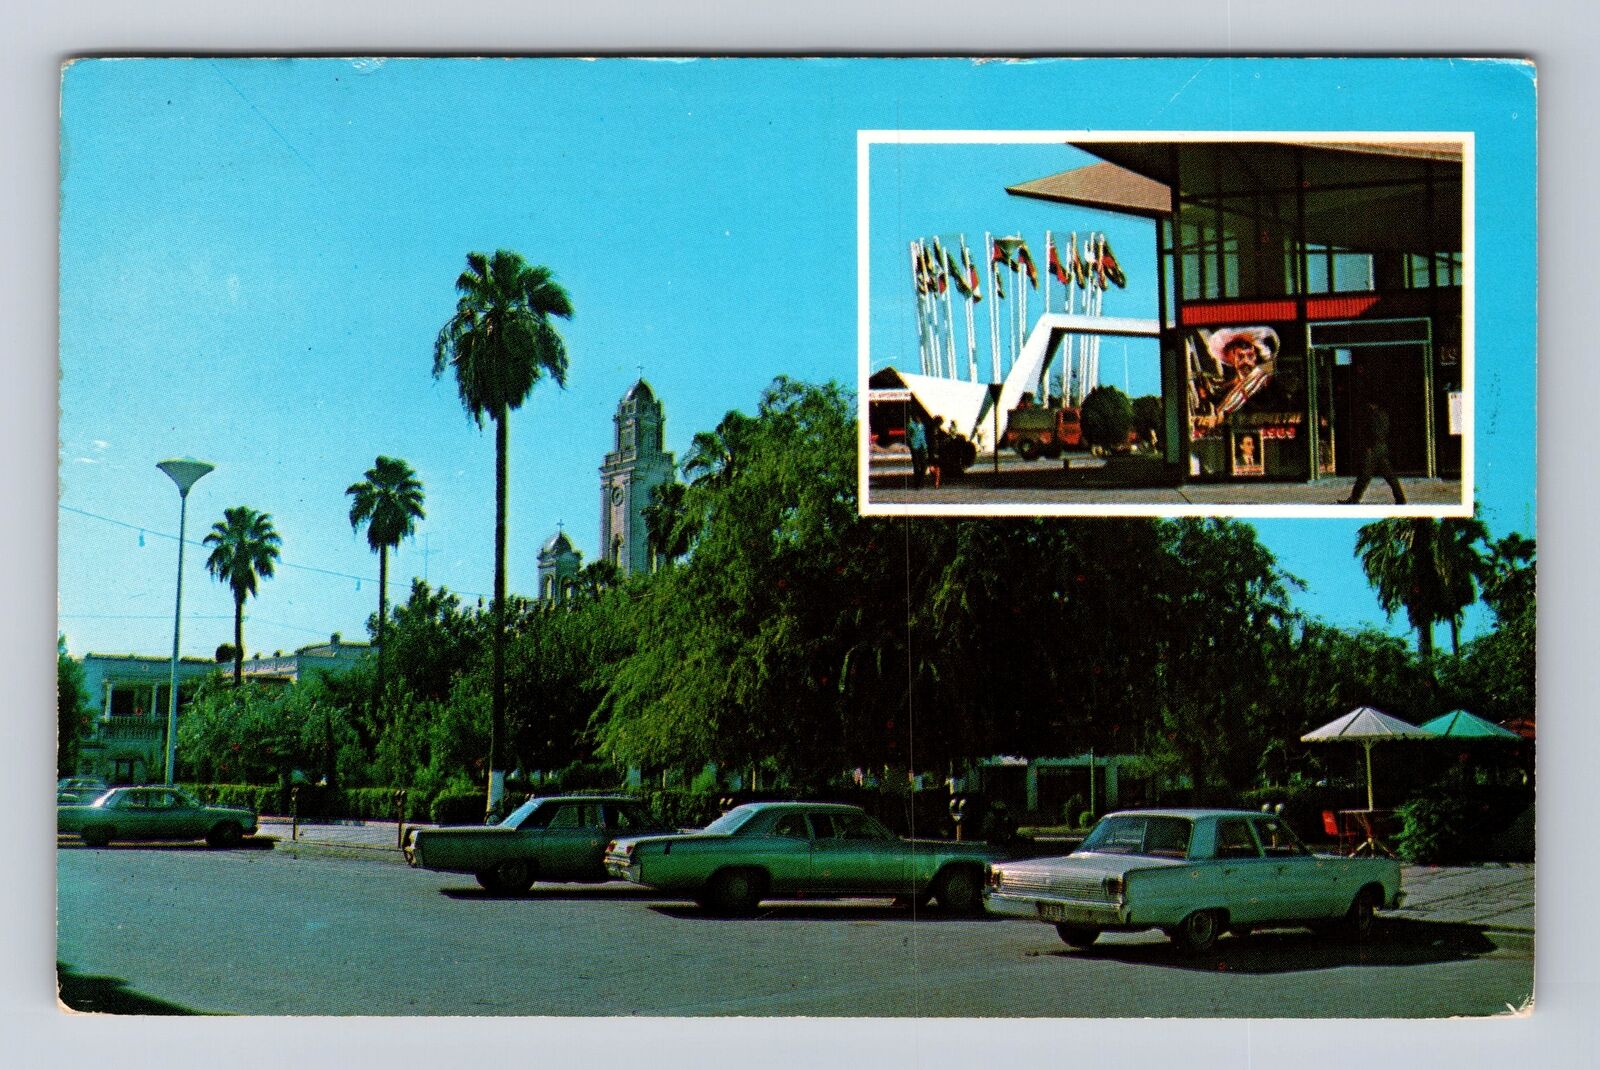 Mexico, Central Square of Black Stones and Sentry Box, Vintage Souvenir Postcard